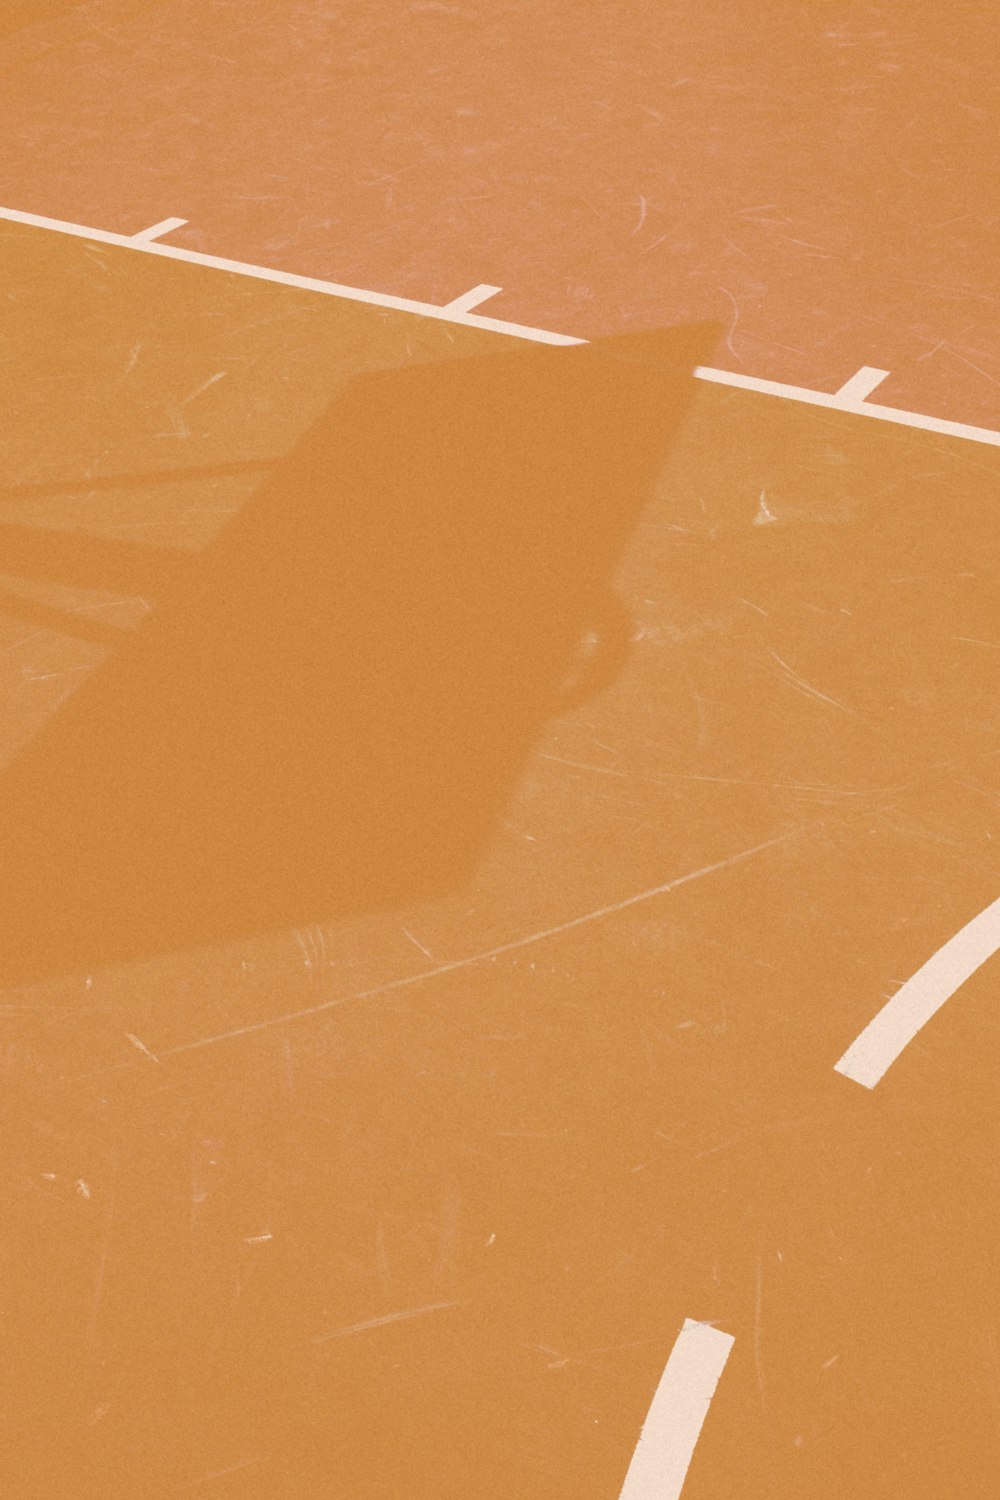 basketball hoop casting shadow on line